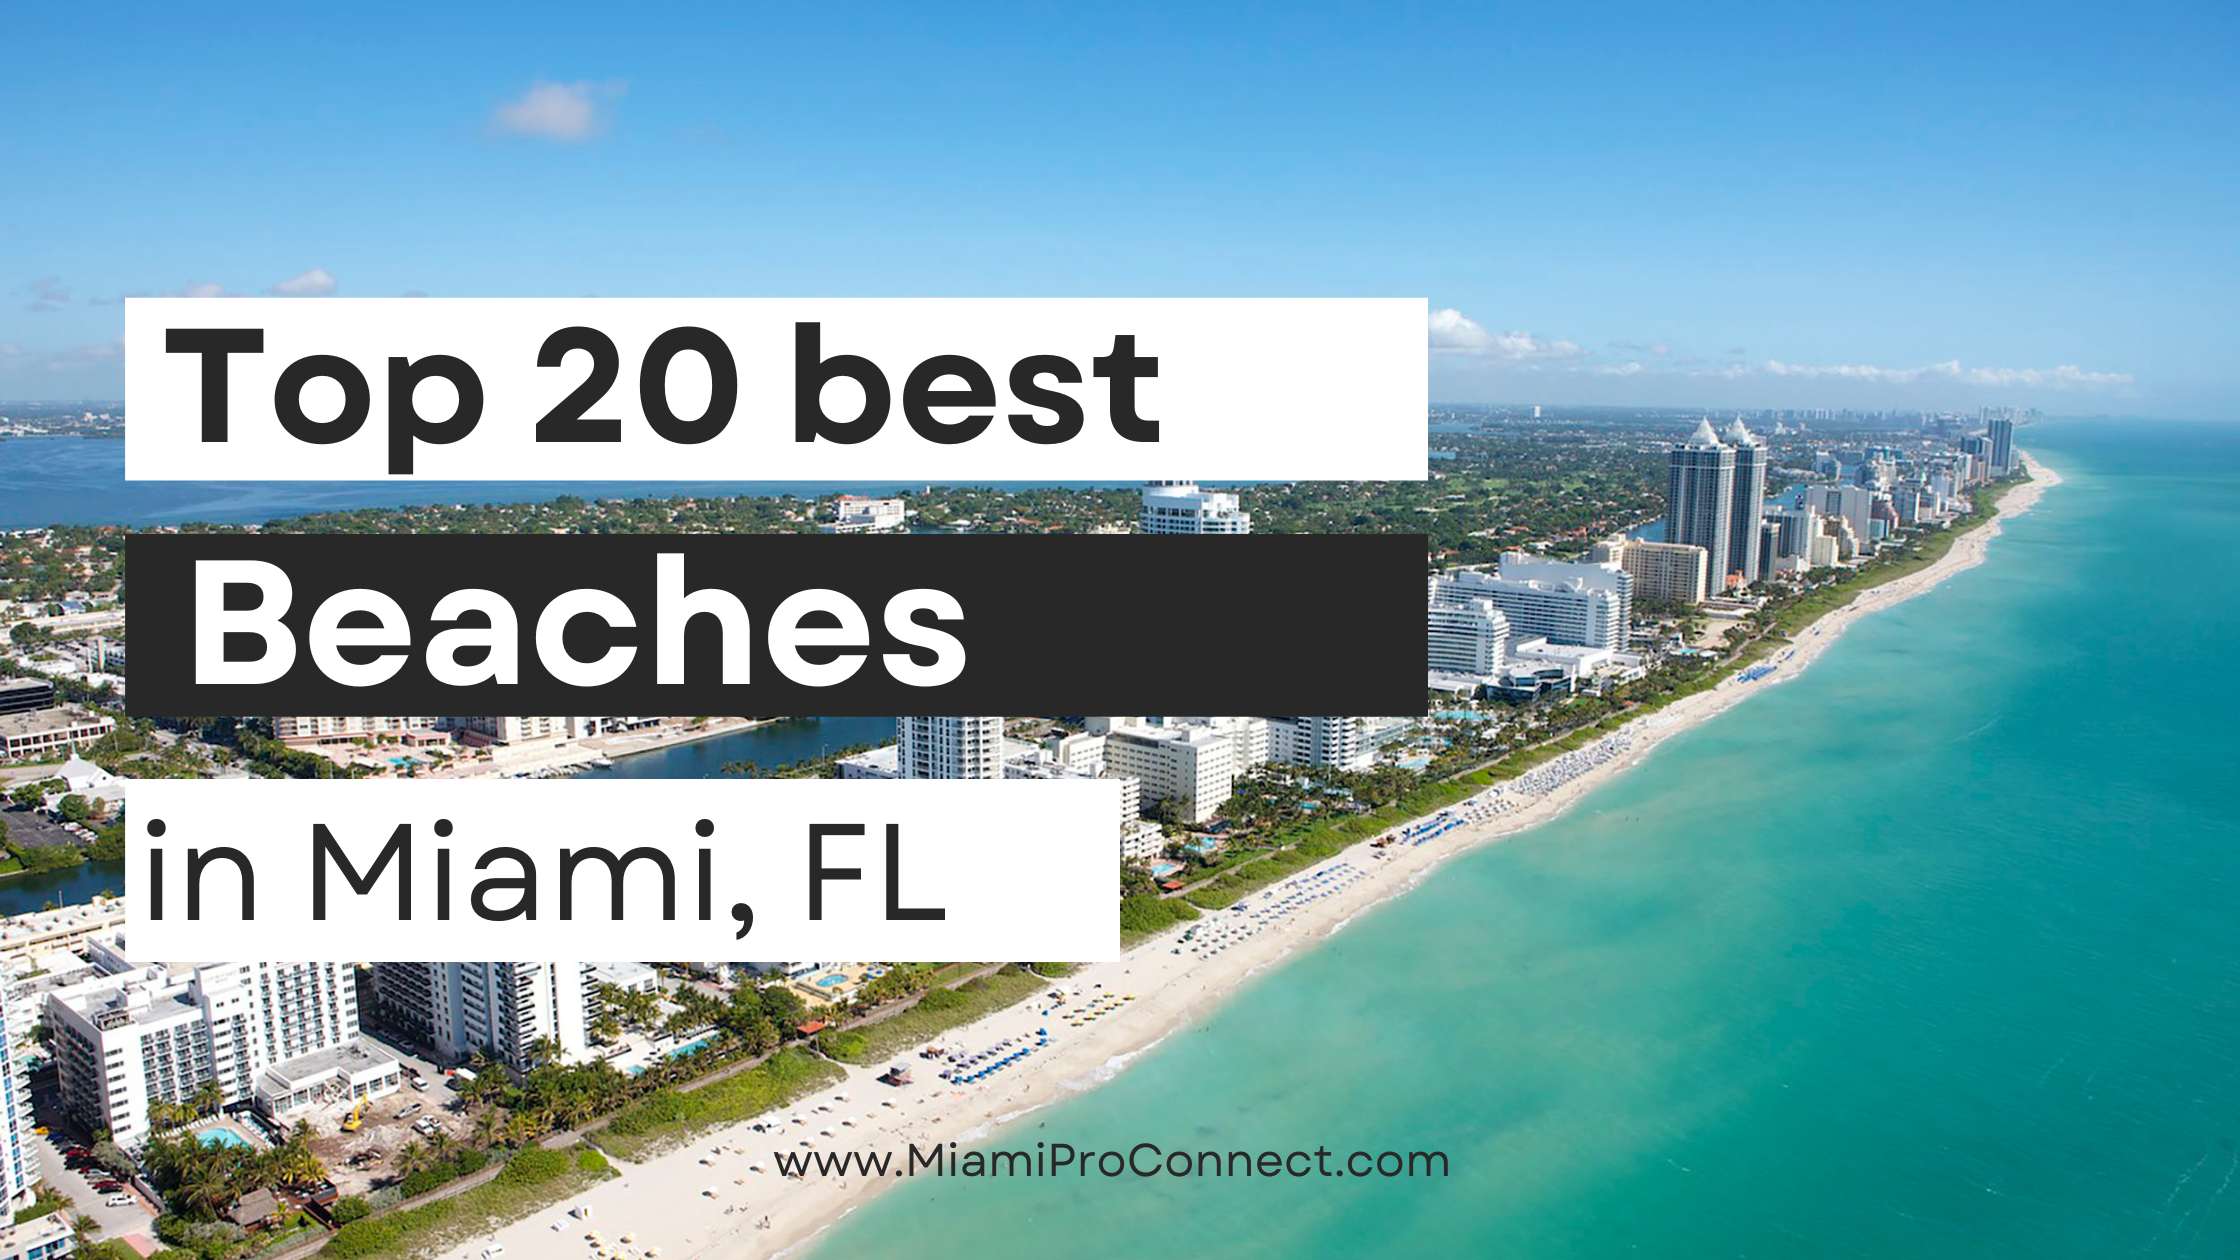 Top Best Beaches in Miami, FL